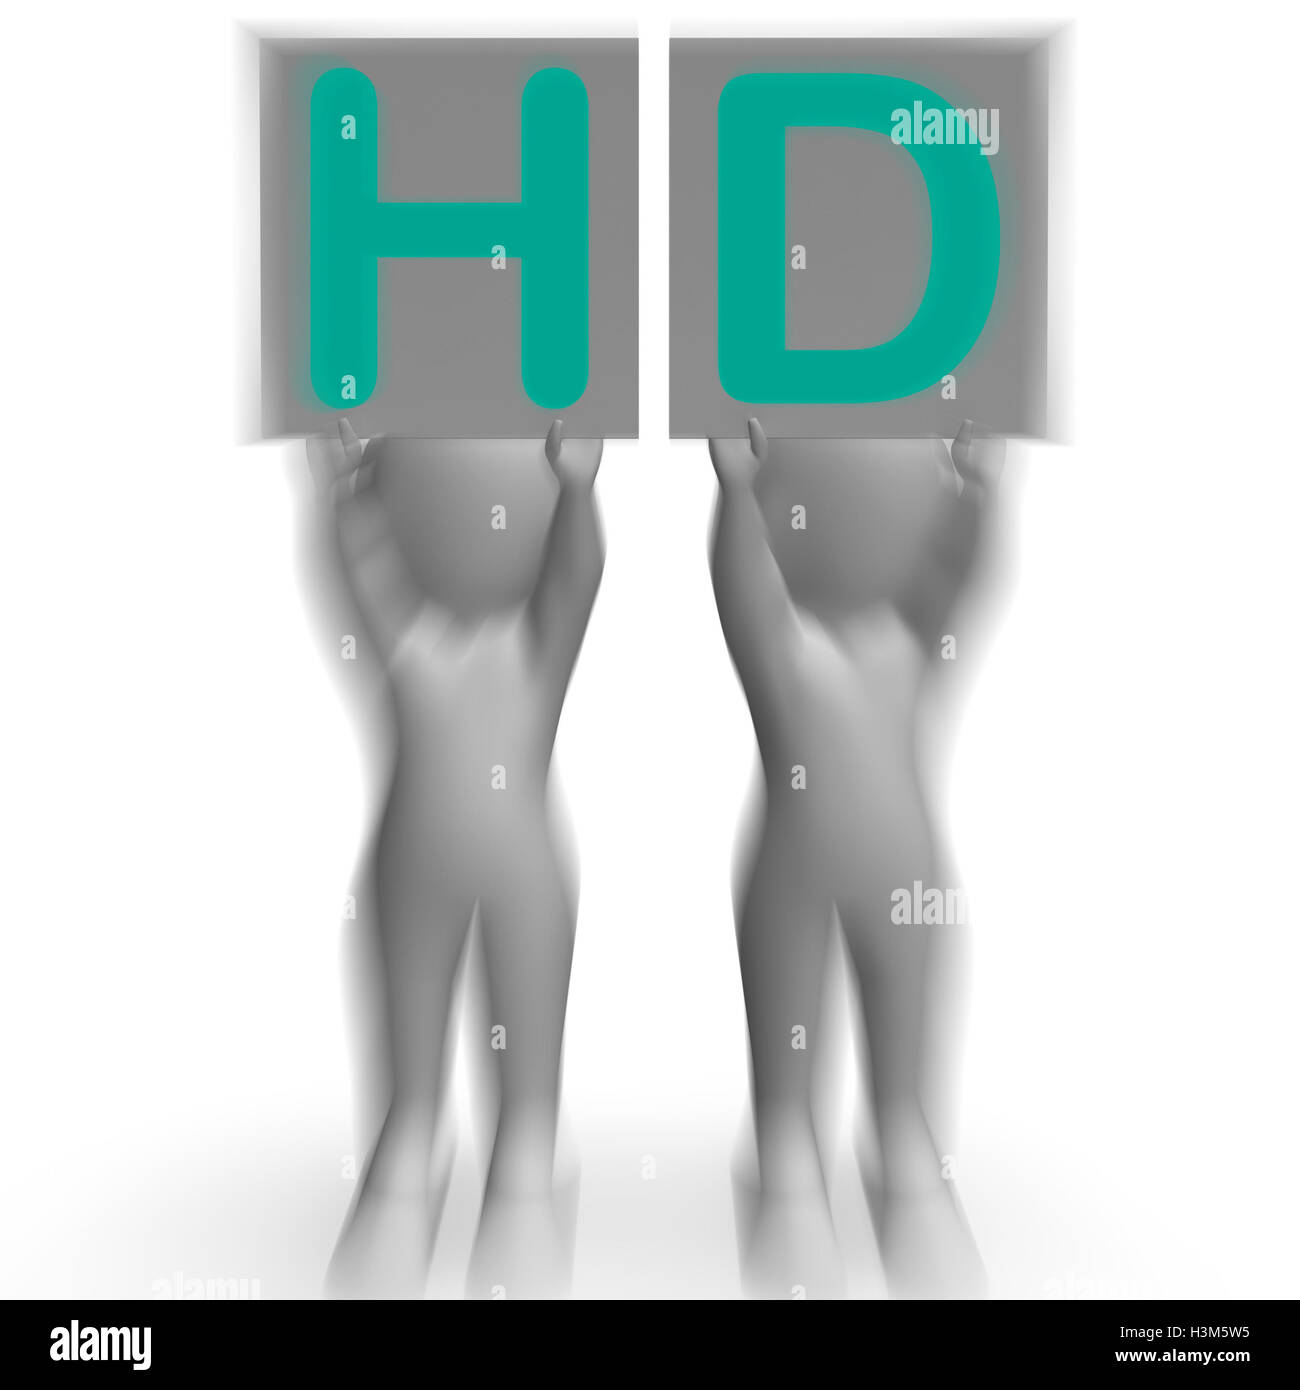 HD pancartas significa televisión de alta definición o de alta resolución Foto de stock